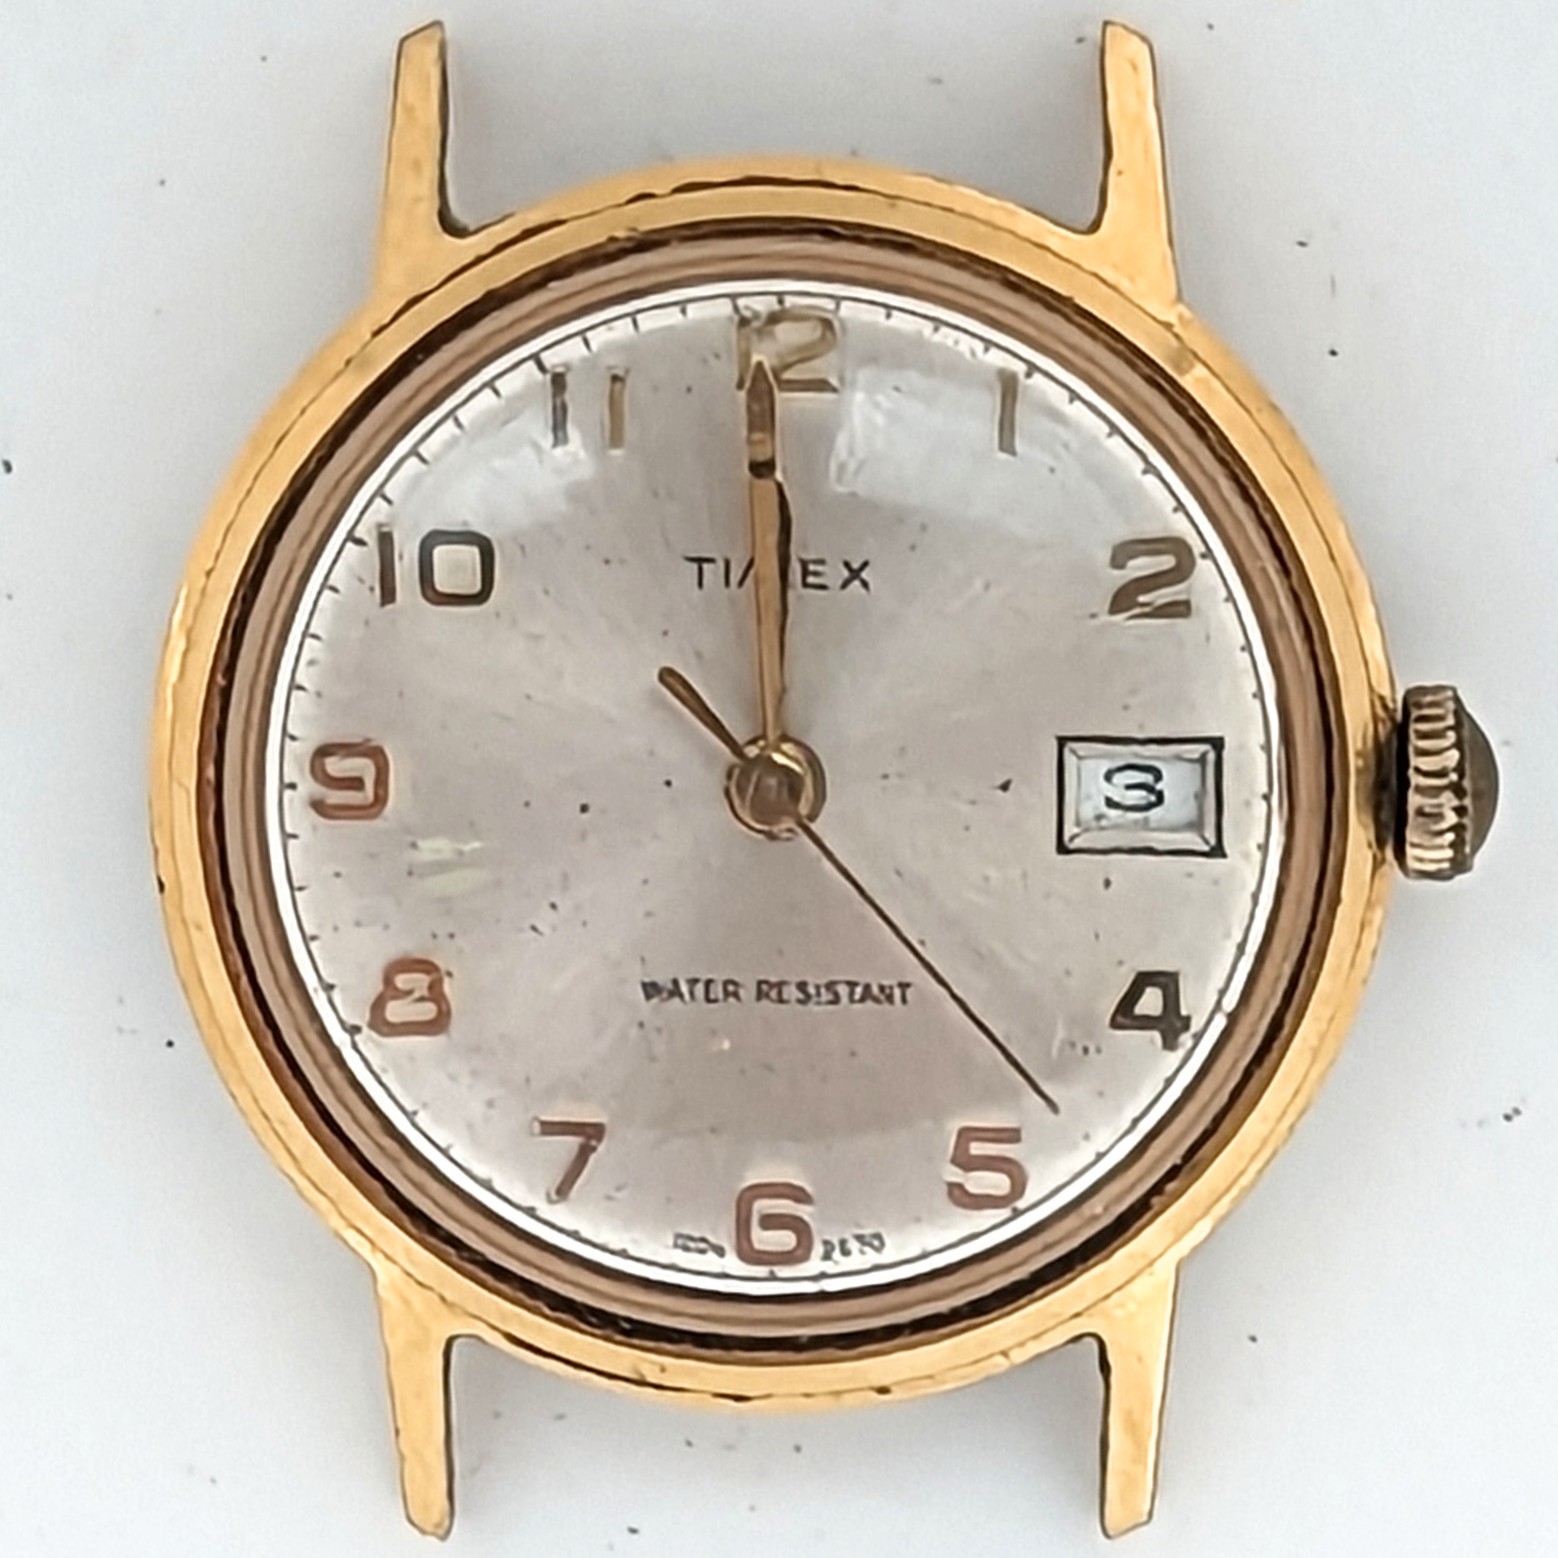 Timex Sprite 1204 2570 [1970]